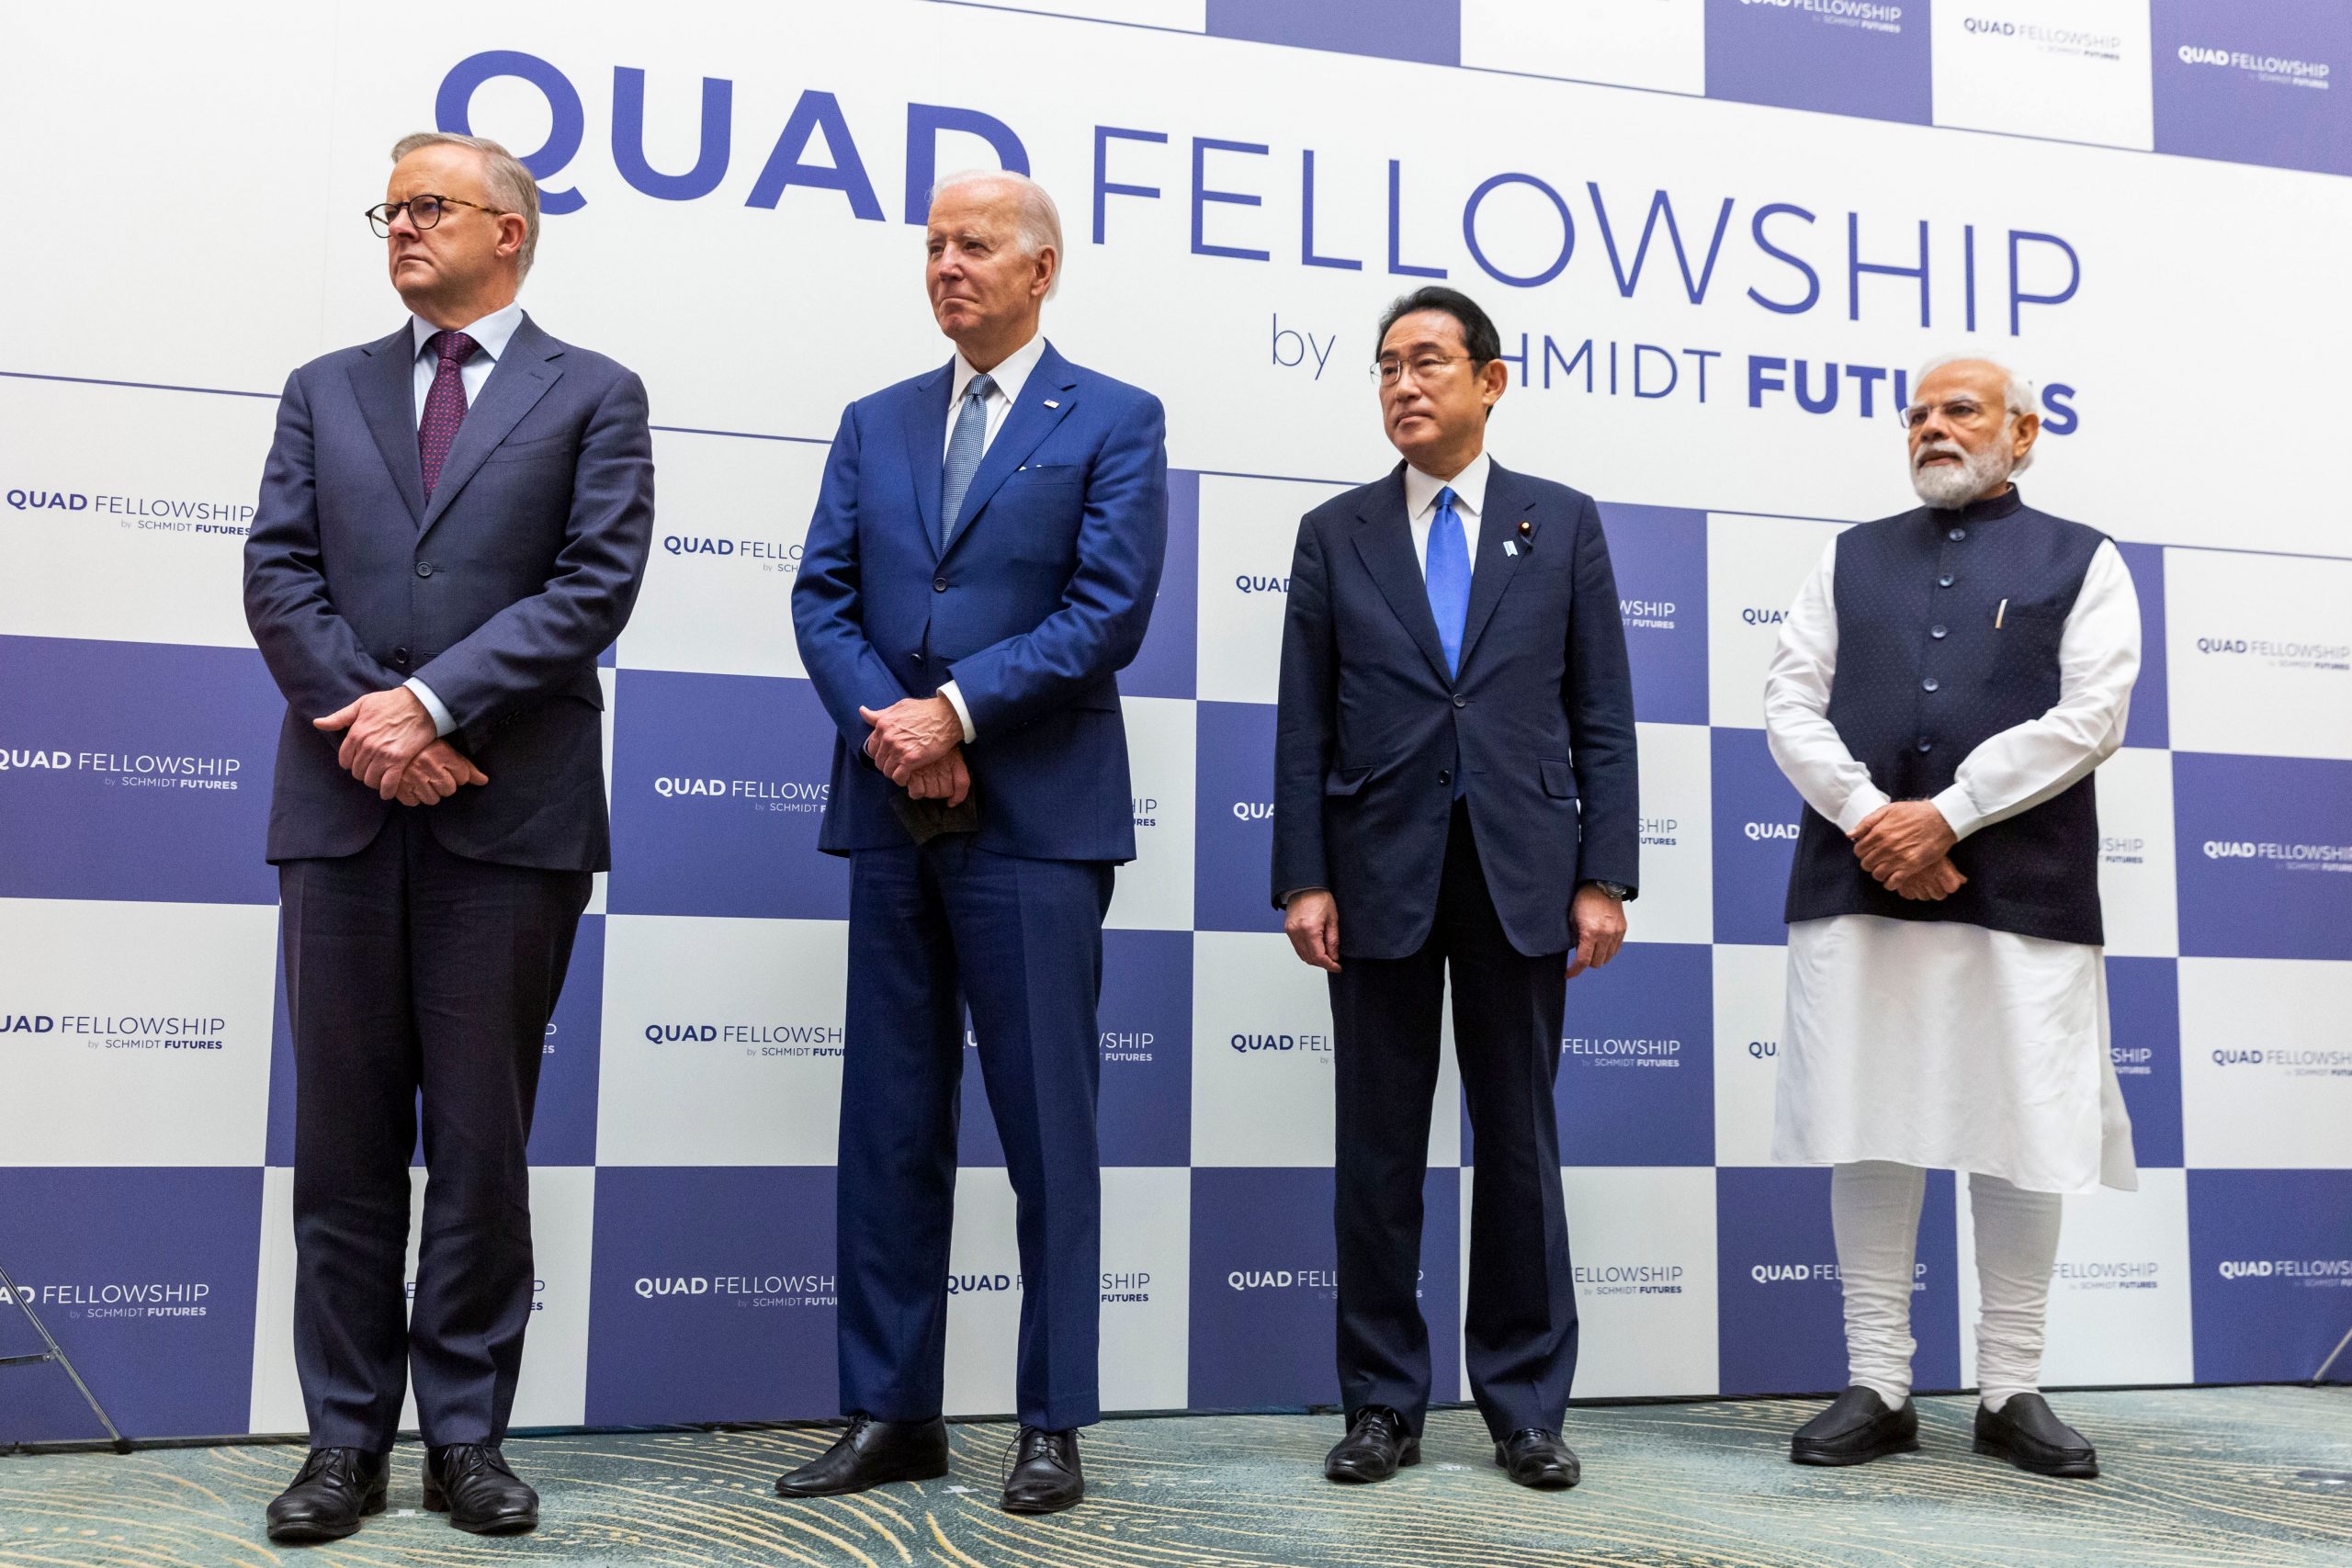 Quad summit: Key takeaways of the diplomatic meet in Tokyo